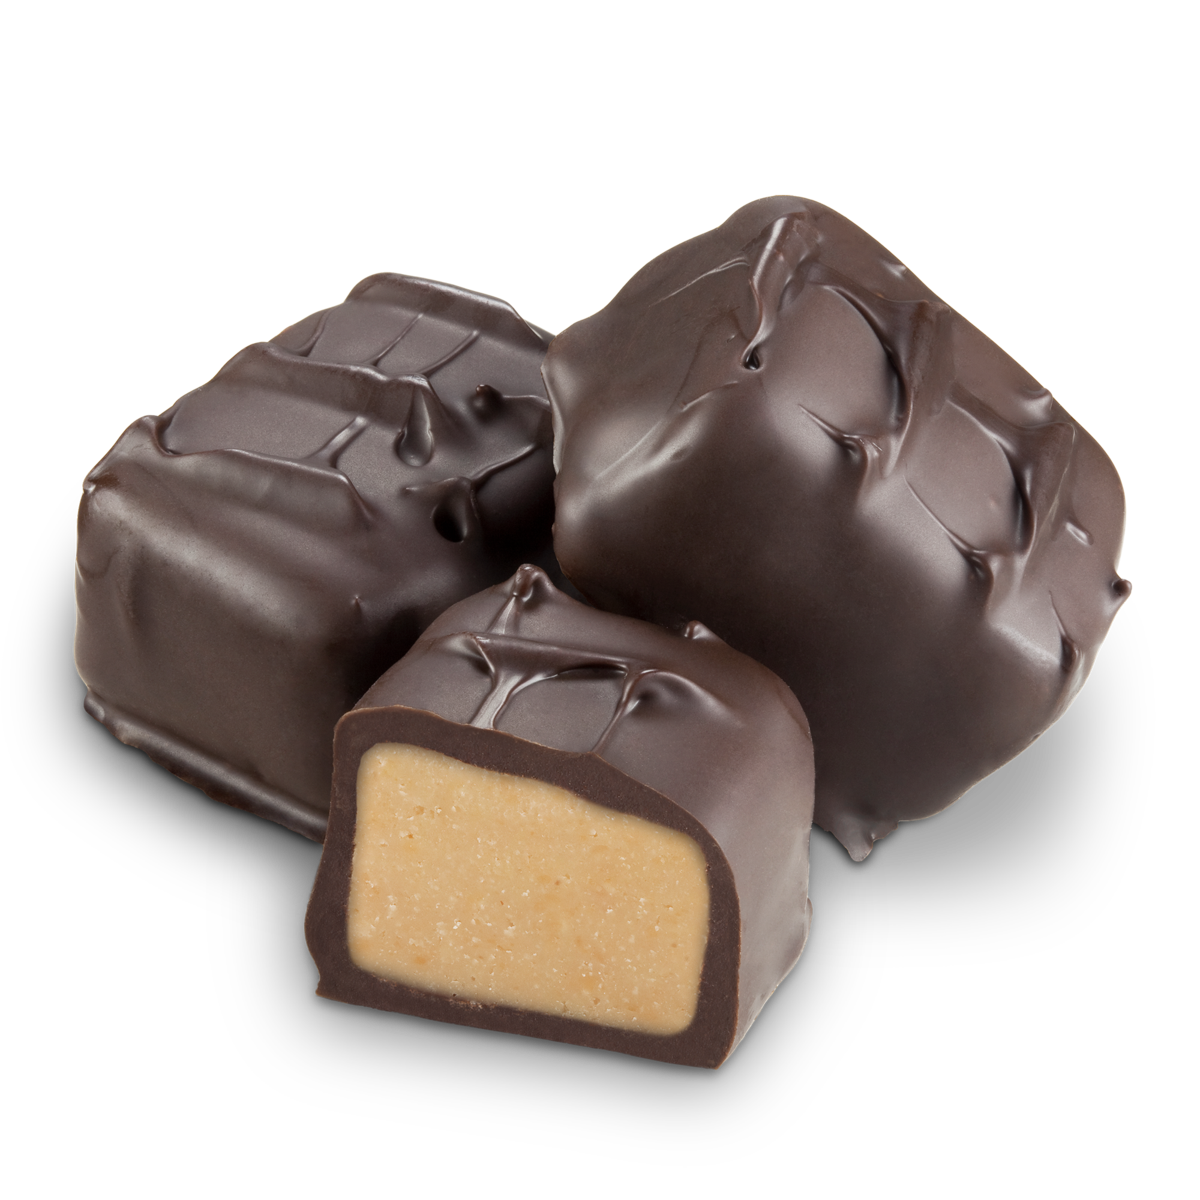 Fort Knox Gold Bar 999.9 Milk Chocolates 10.8 oz. Box - All City Candy